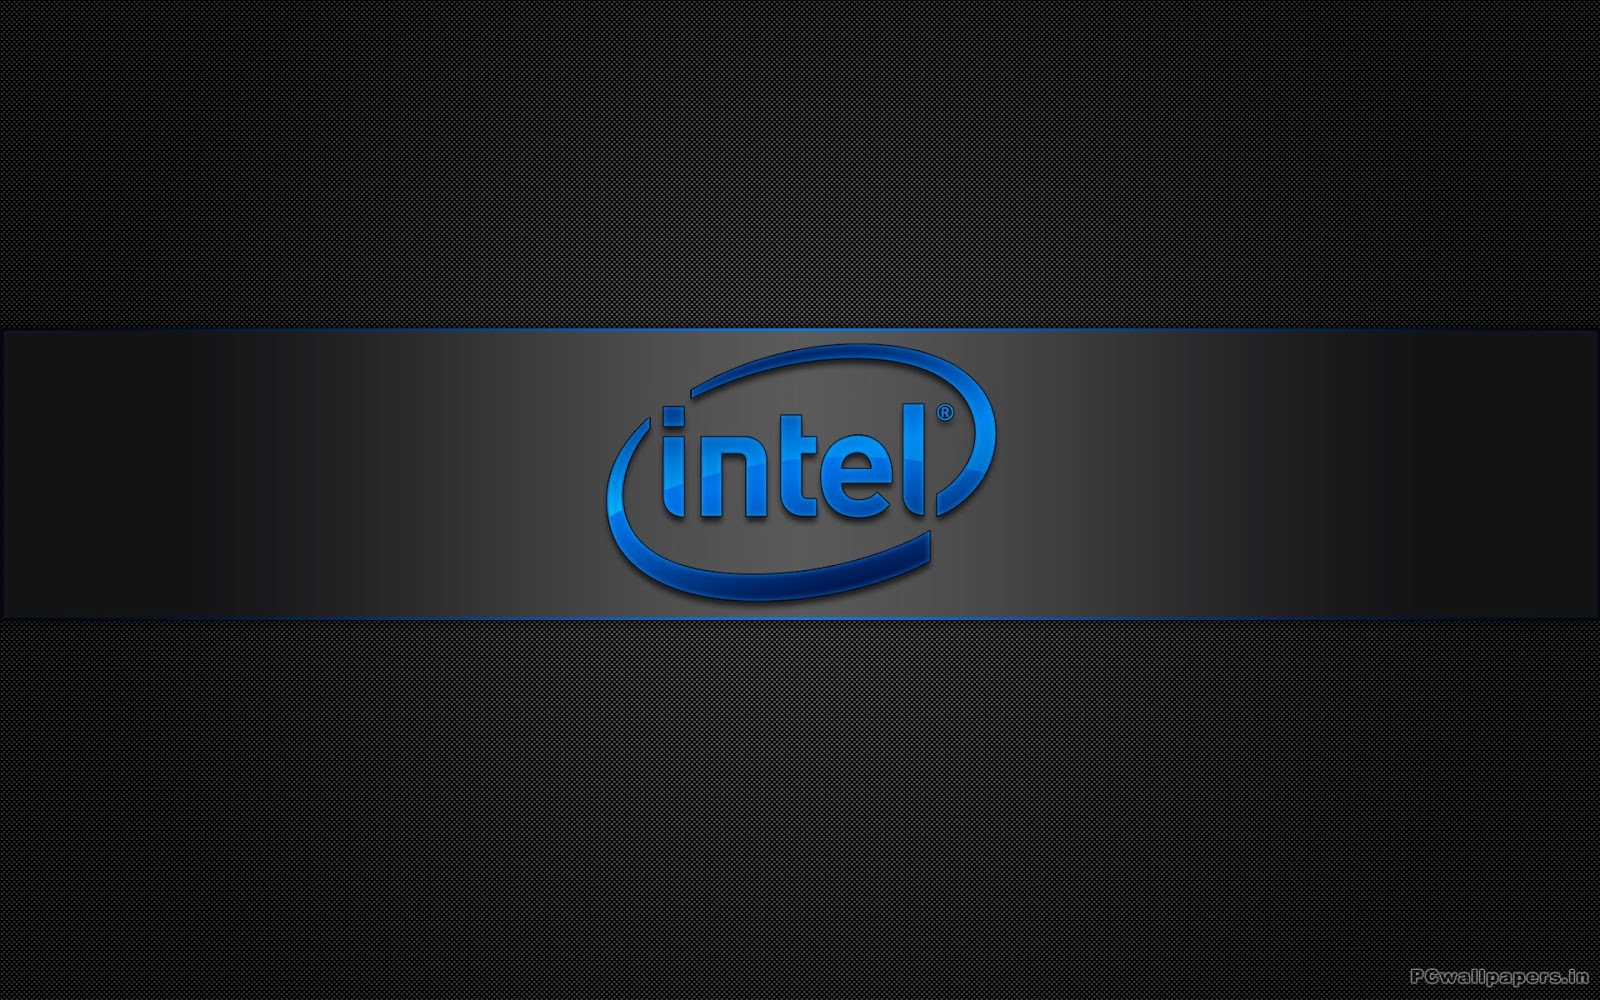 Description Download wallpaper of Intel Logo in High Resolution